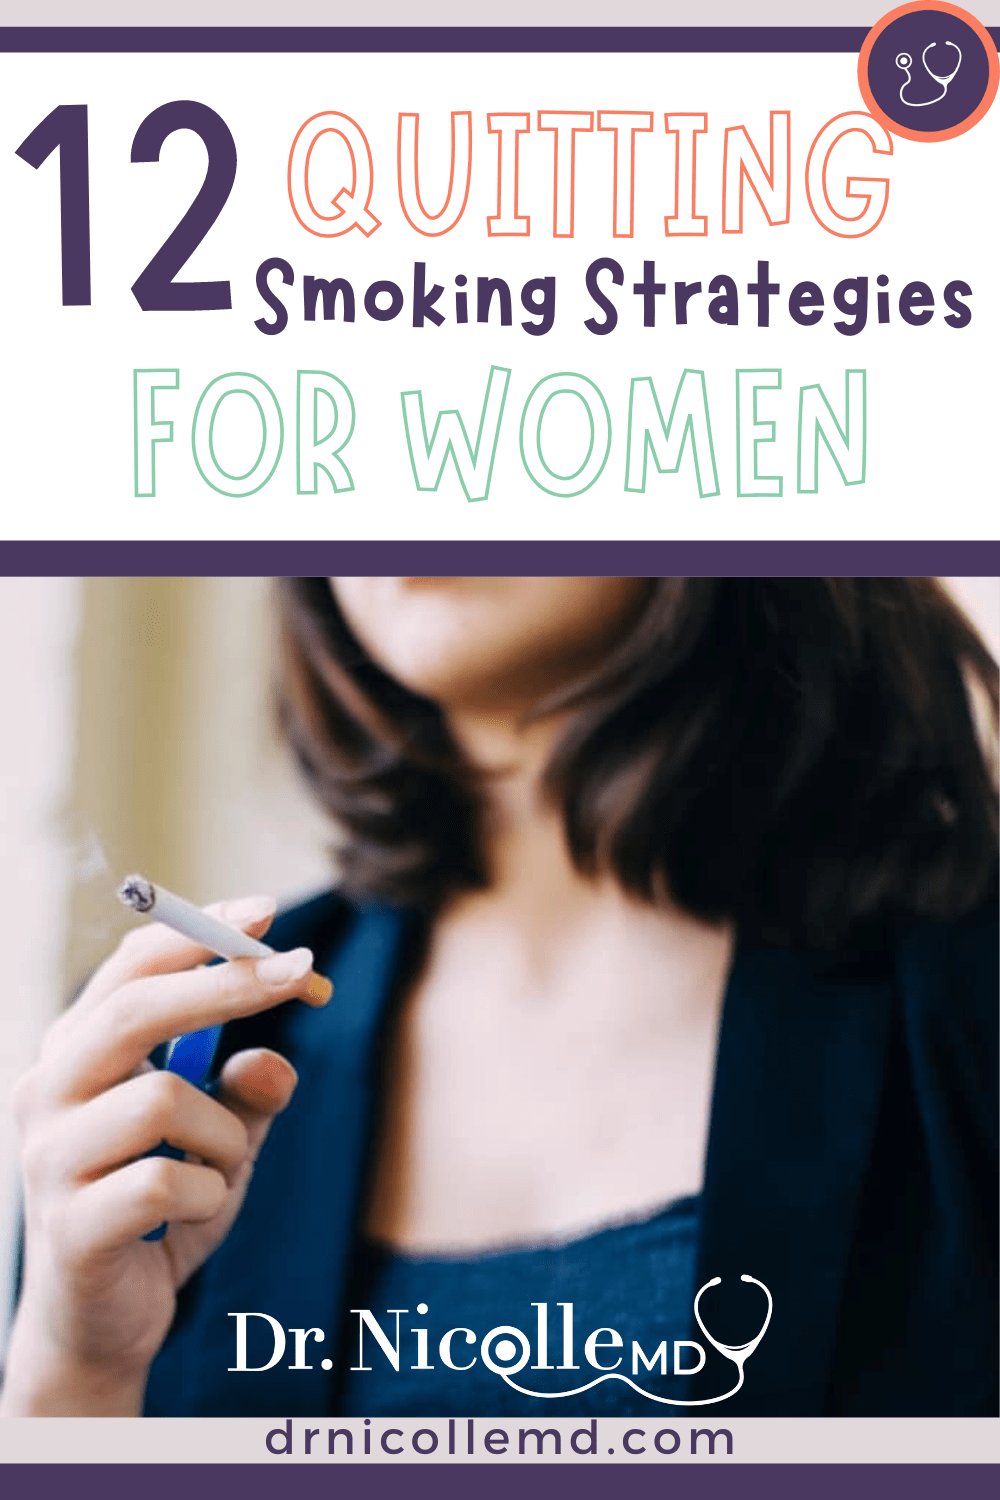 12 Quitting Smoking Strategies For Women